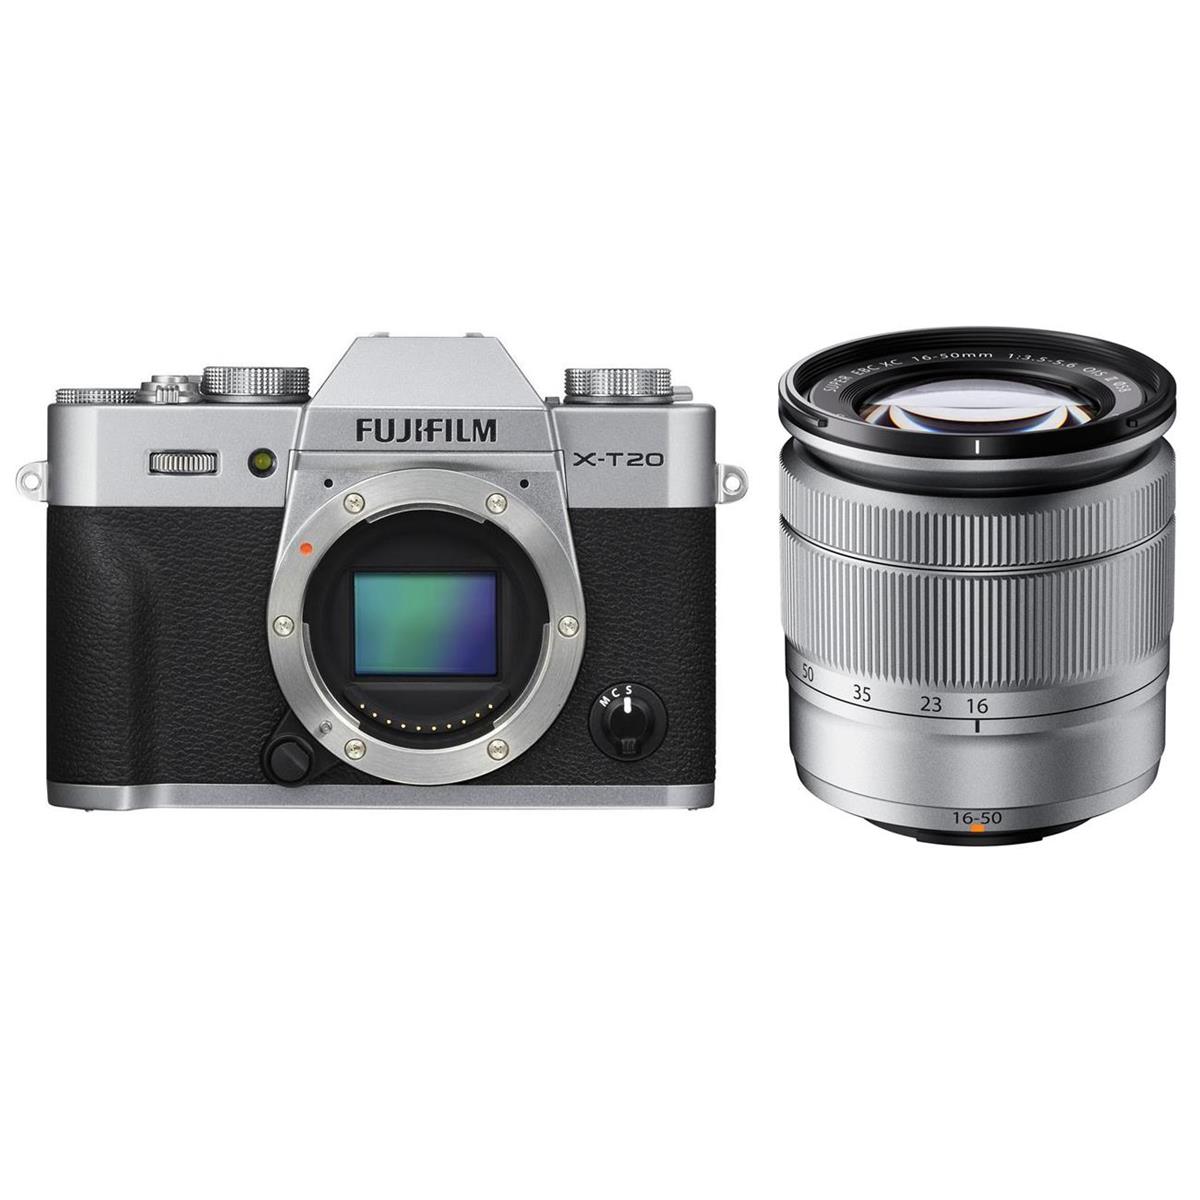 Fujifilm X-T20 Mirrorless Digital Camera with XC16-50mm Lens (Silver)